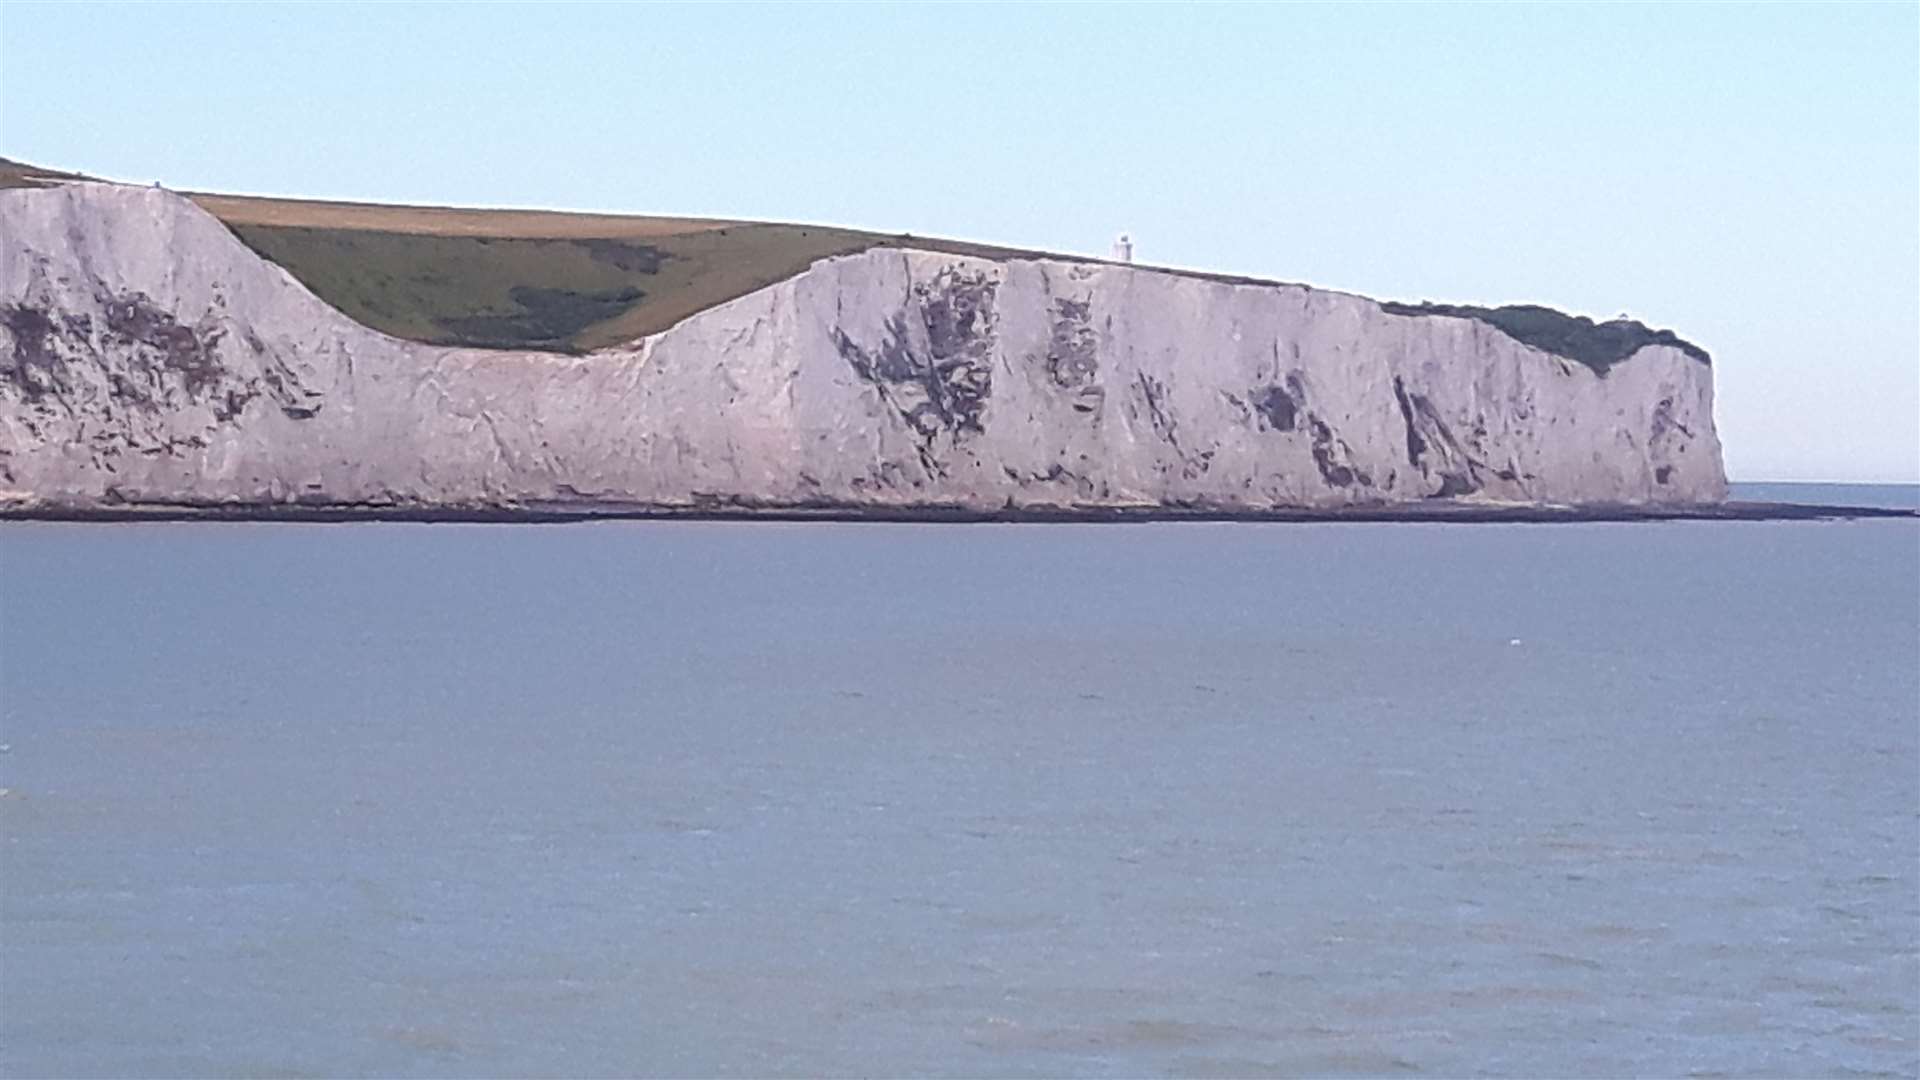 The White Cliffs of Dover. Picture: Sam Lennon